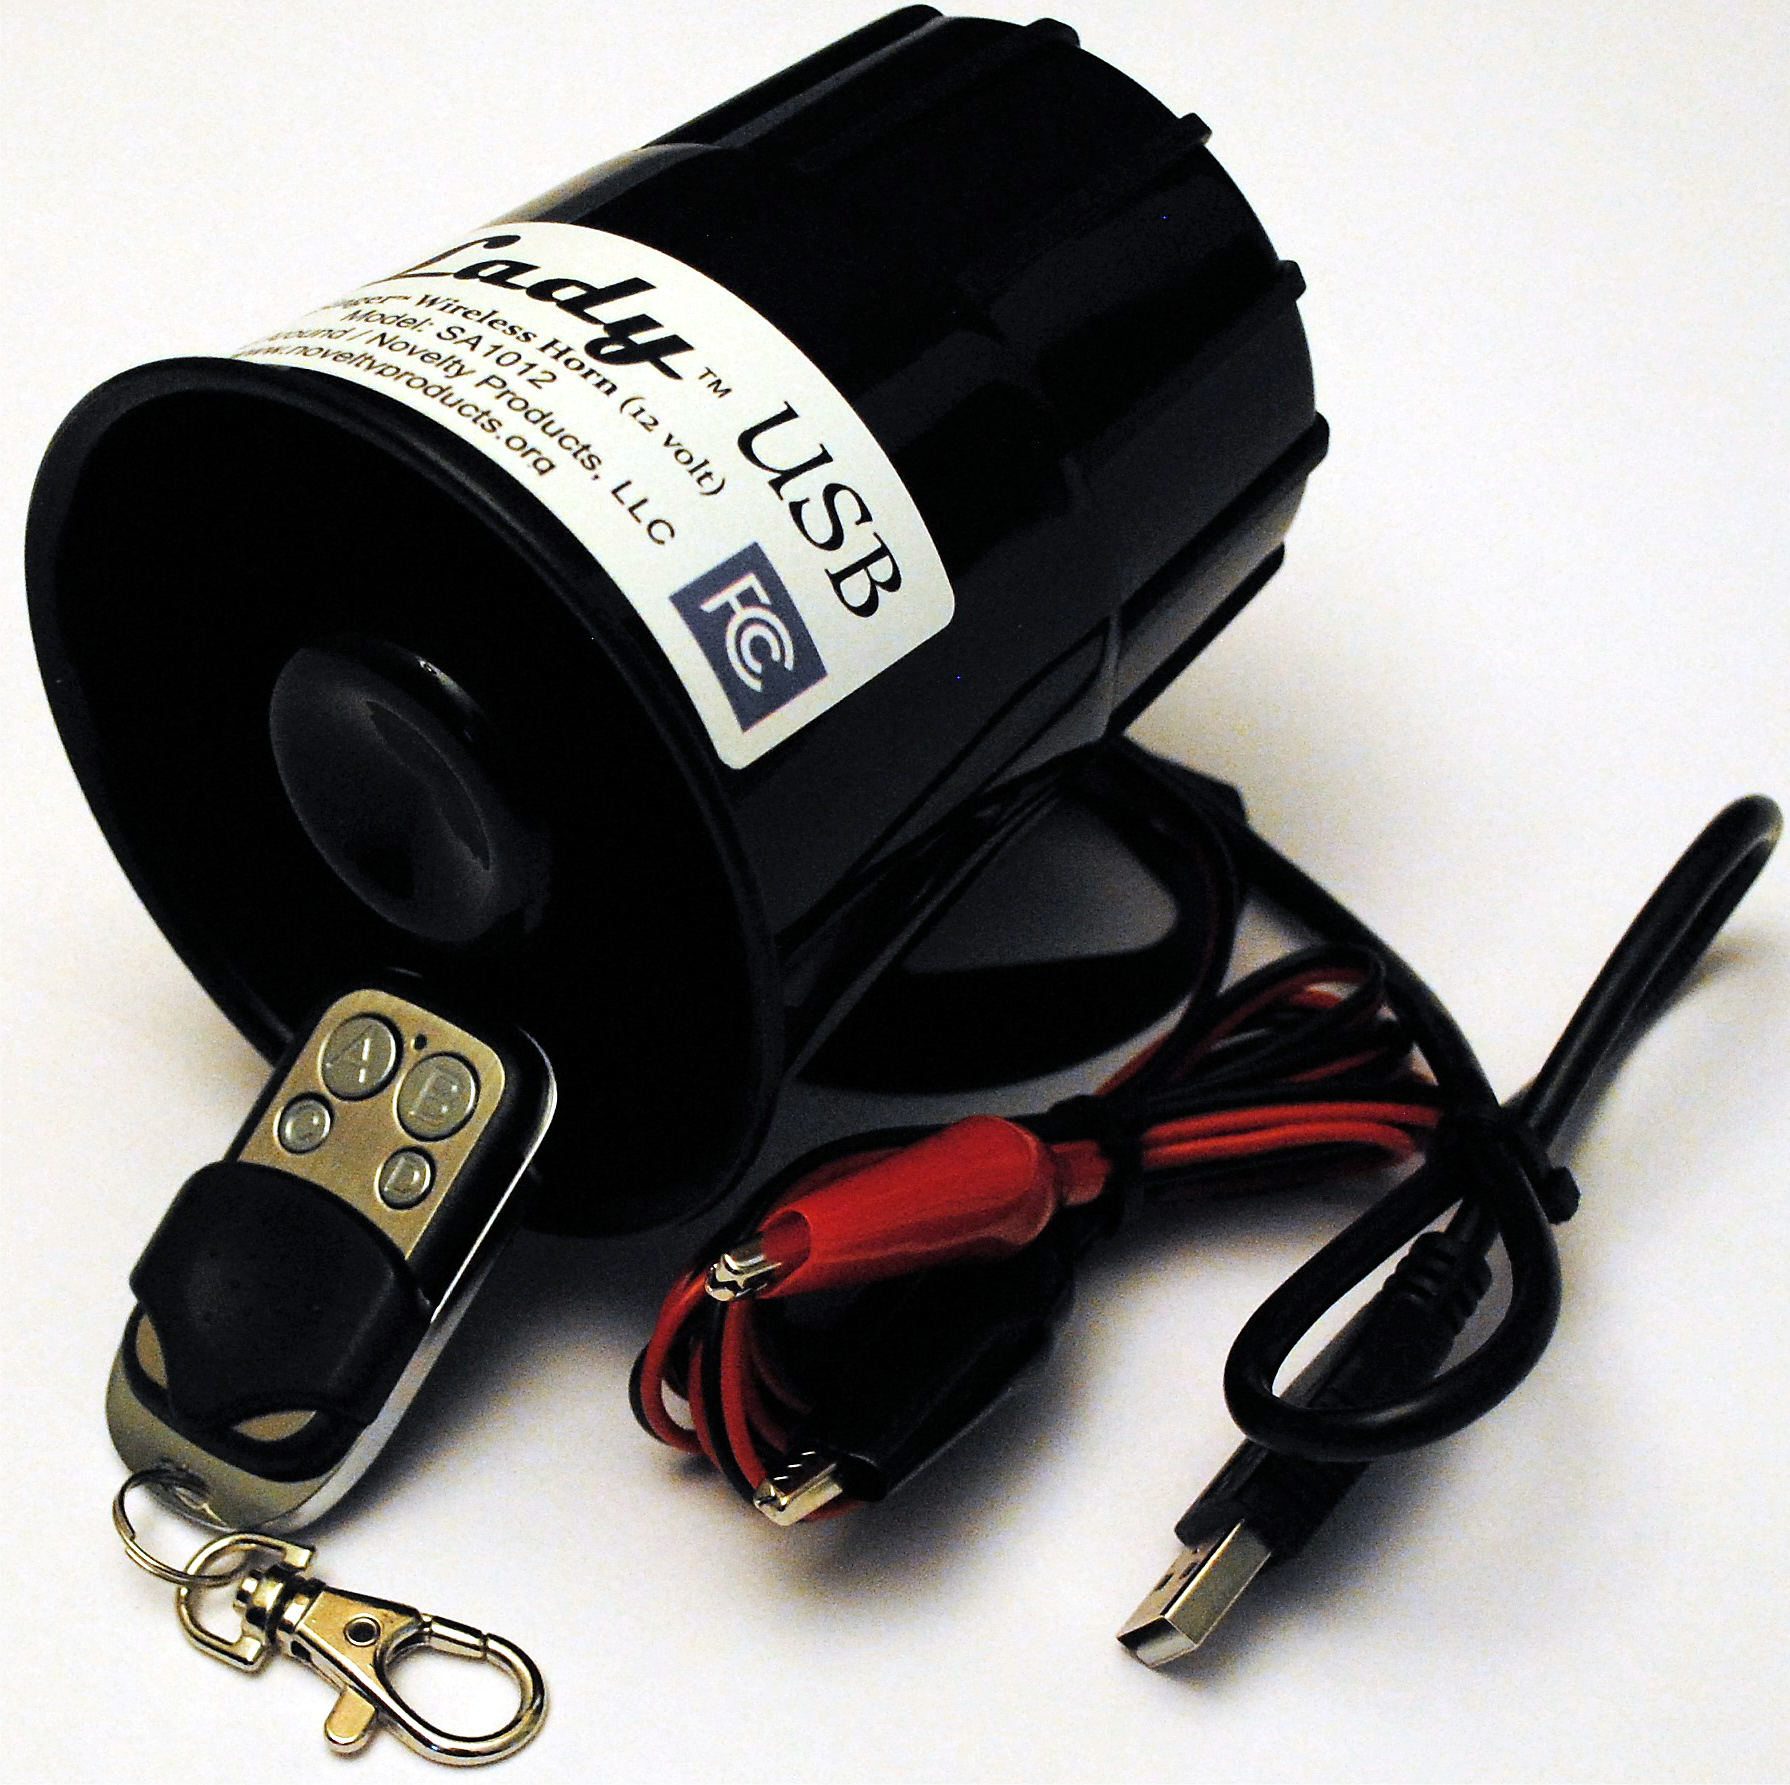 University of Iowa Hawkeyes USB Car Horn with Wireless KeyFOB Remote